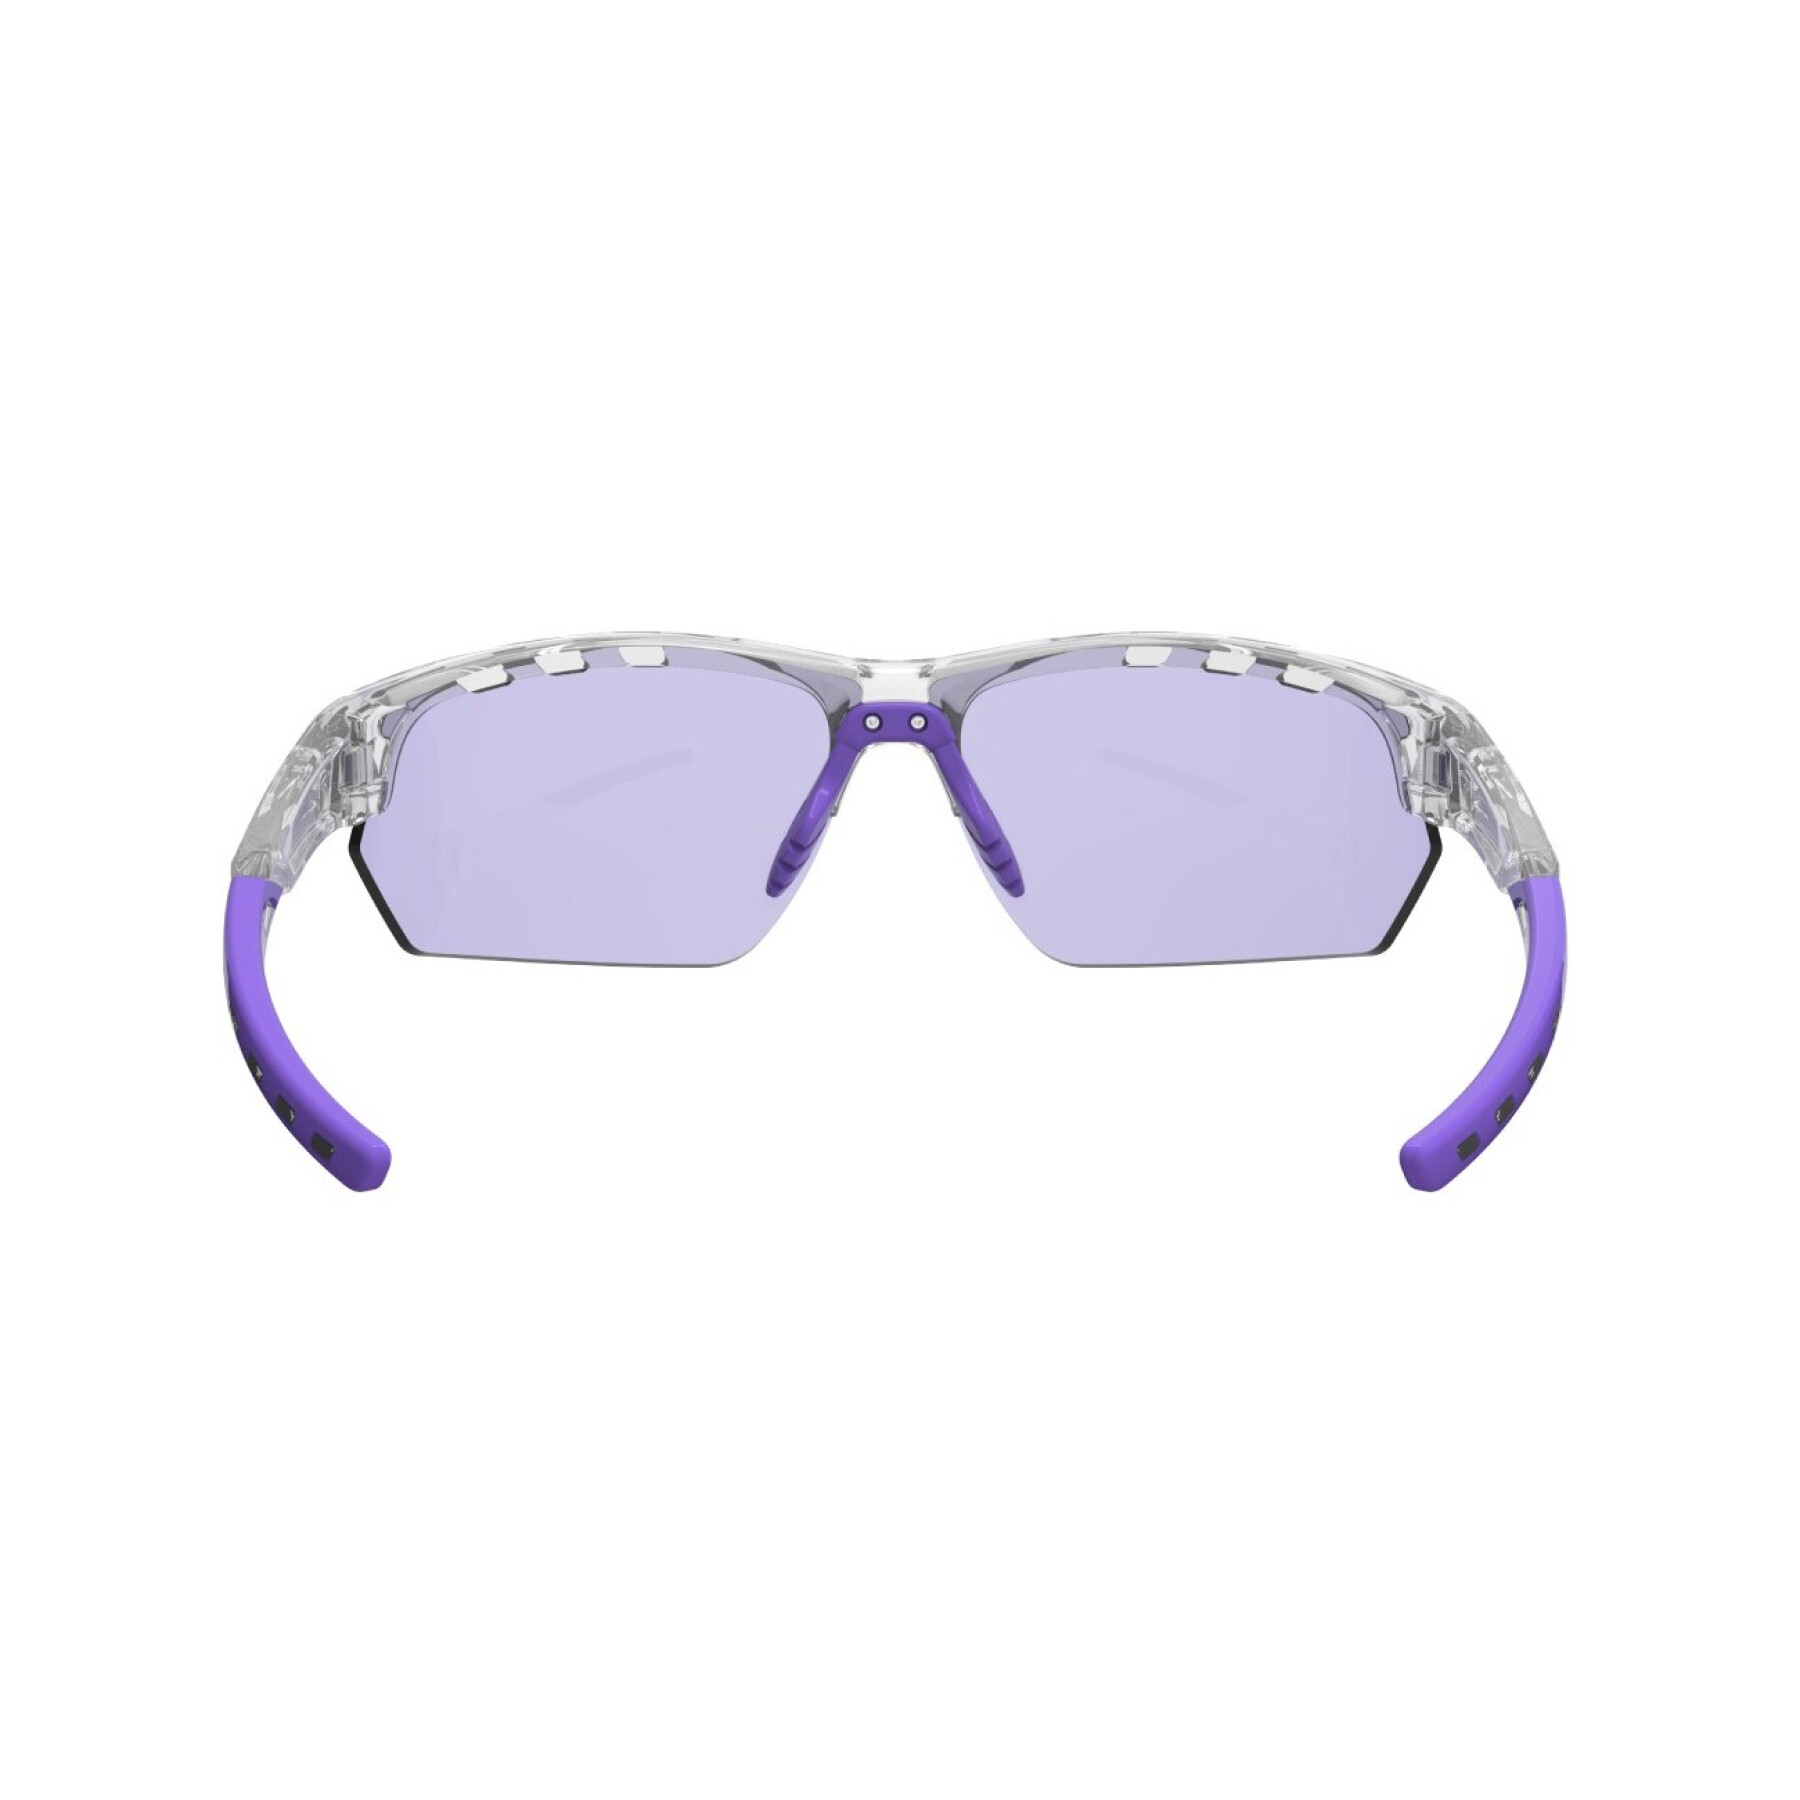 Sunglasses AZR Pro Kromic Izoard